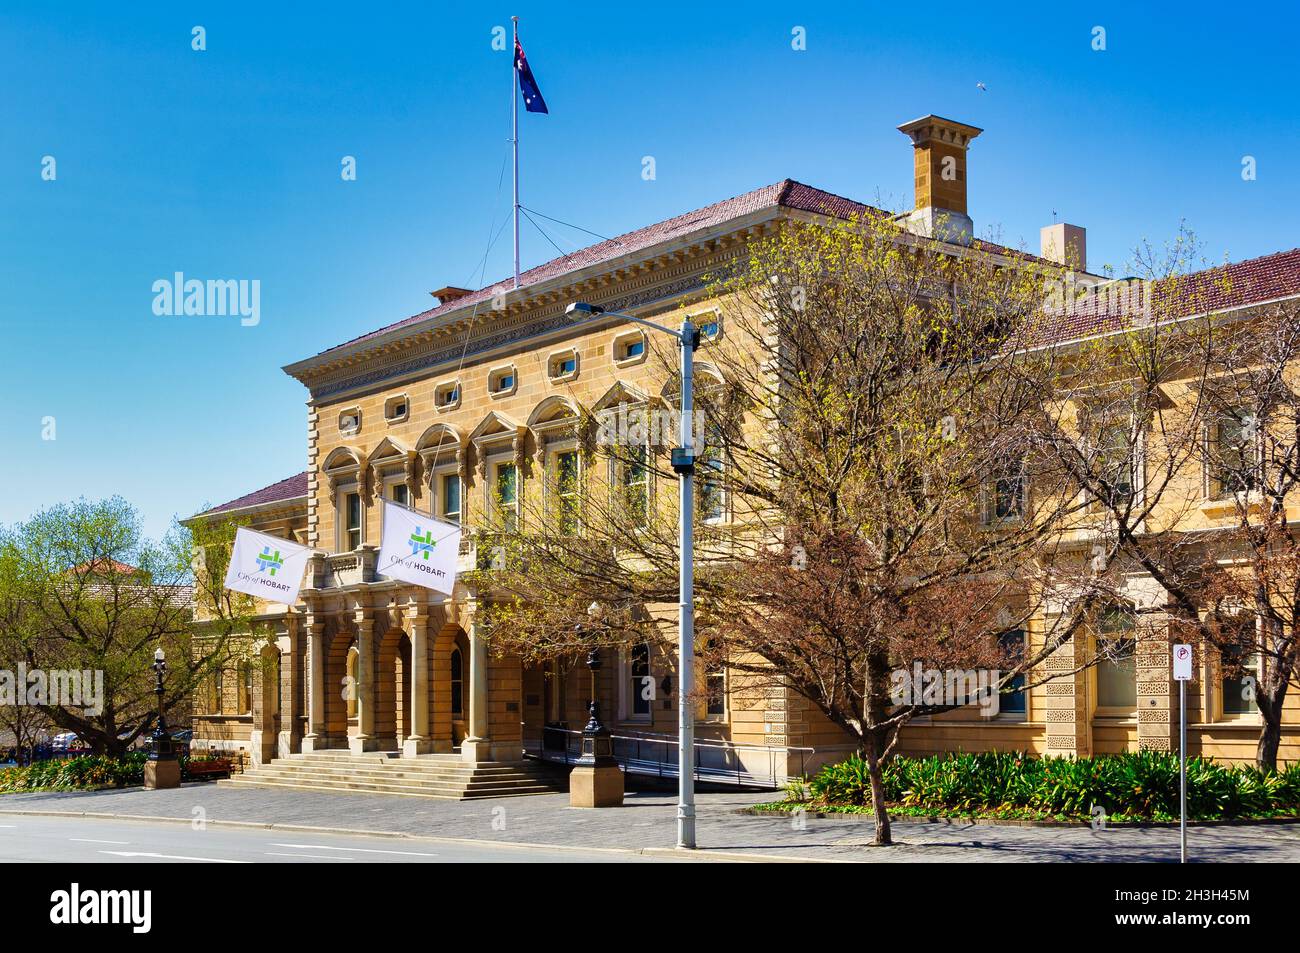 The landmark sandstone building of Hobart Town Hall on Macquarie Street - Hobart, Tasmania, Australia Stock Photo